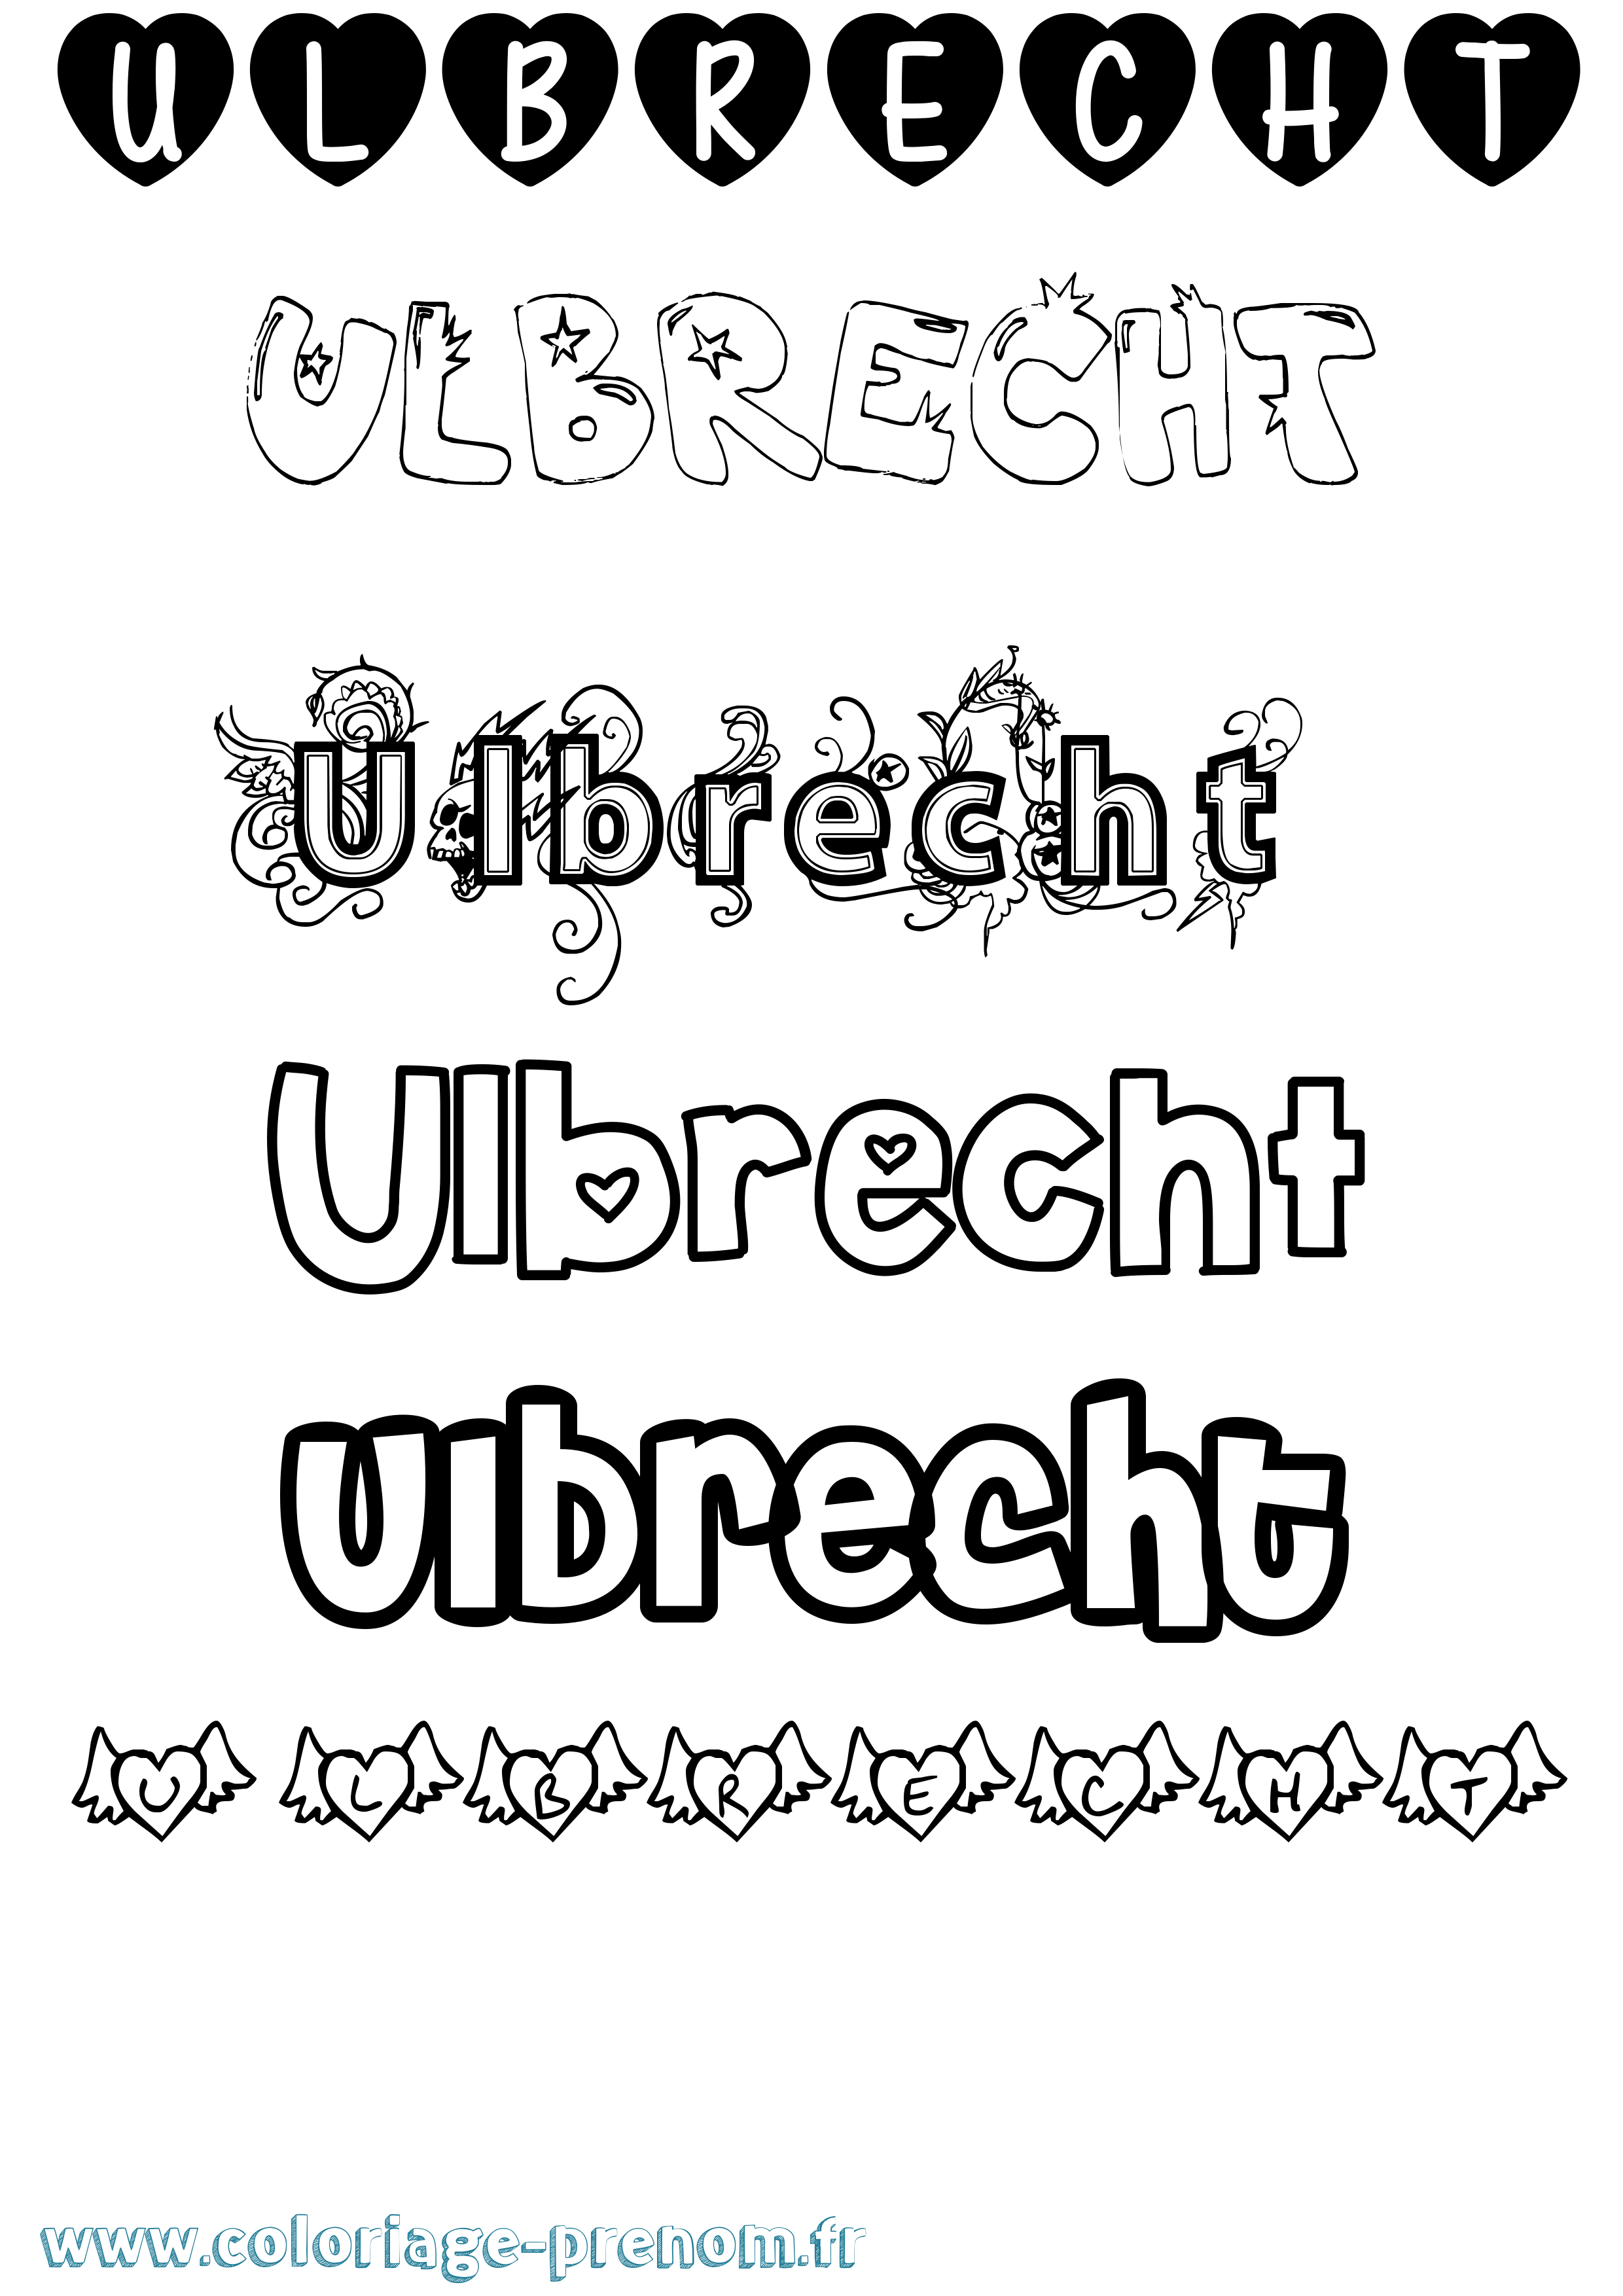 Coloriage prénom Ulbrecht Girly